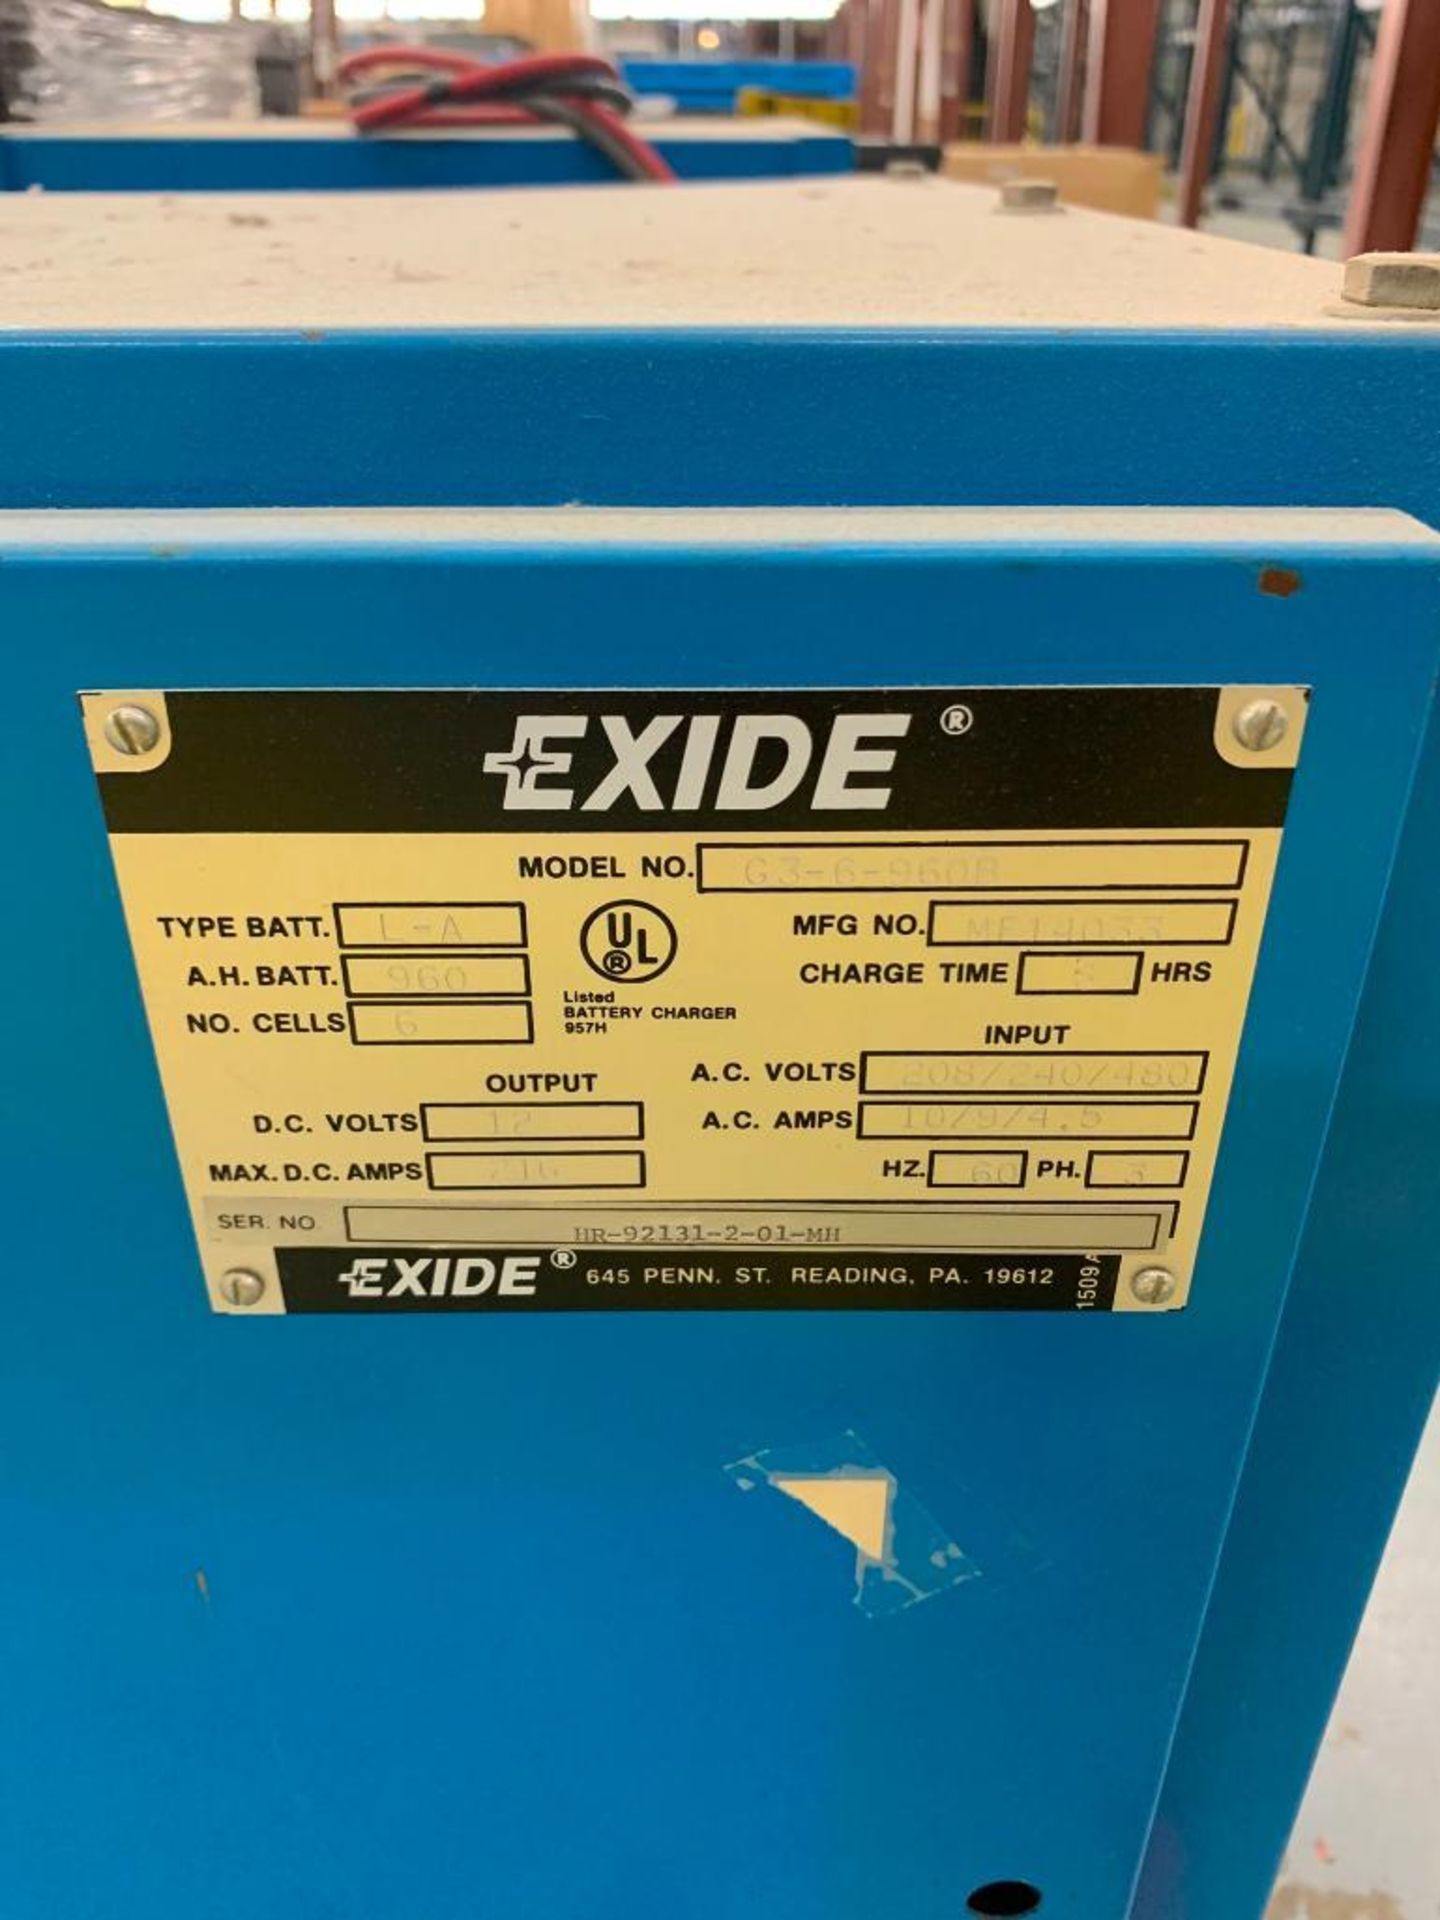 EXIDE SYSTEM 3000 BATTERY CHARGER, 12 V, 208/240/480 V, MODEL G3-6-960B, S/N HR-92131-2-01-MH, 3 PHA - Image 2 of 2